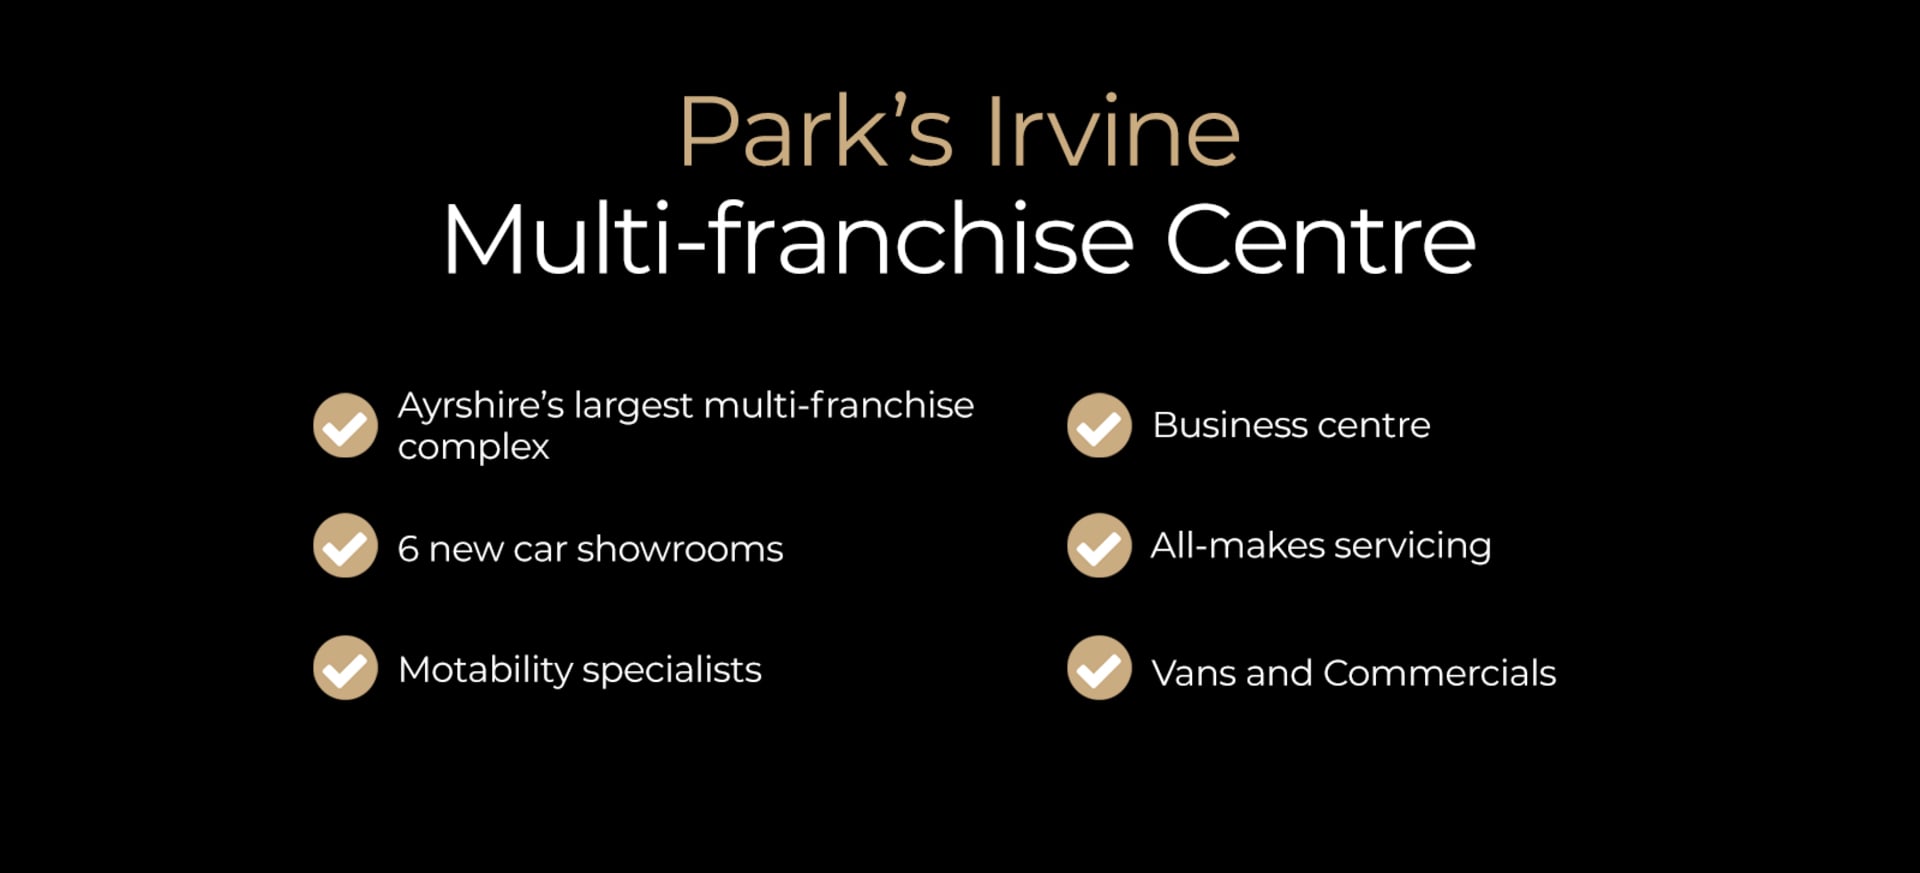 Park's Irvine Multi-franchise Centre